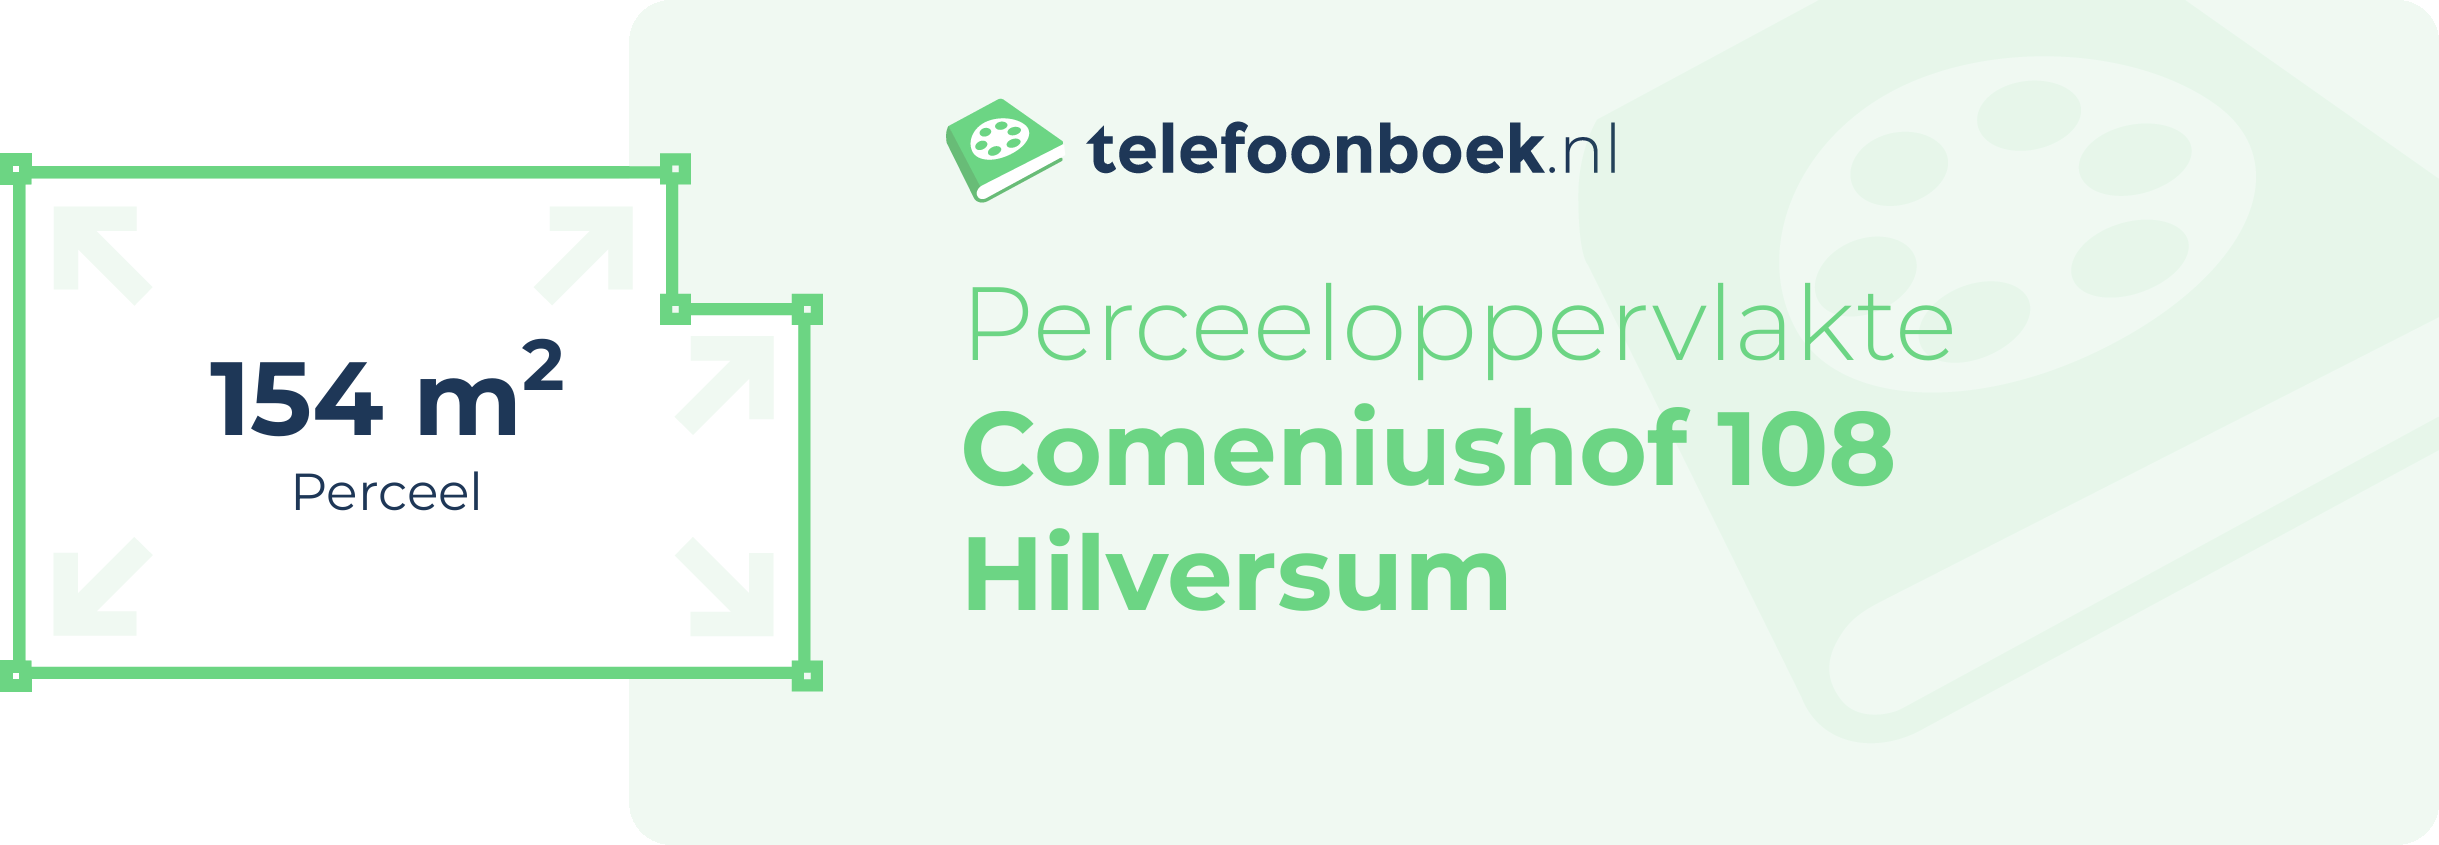 Perceeloppervlakte Comeniushof 108 Hilversum